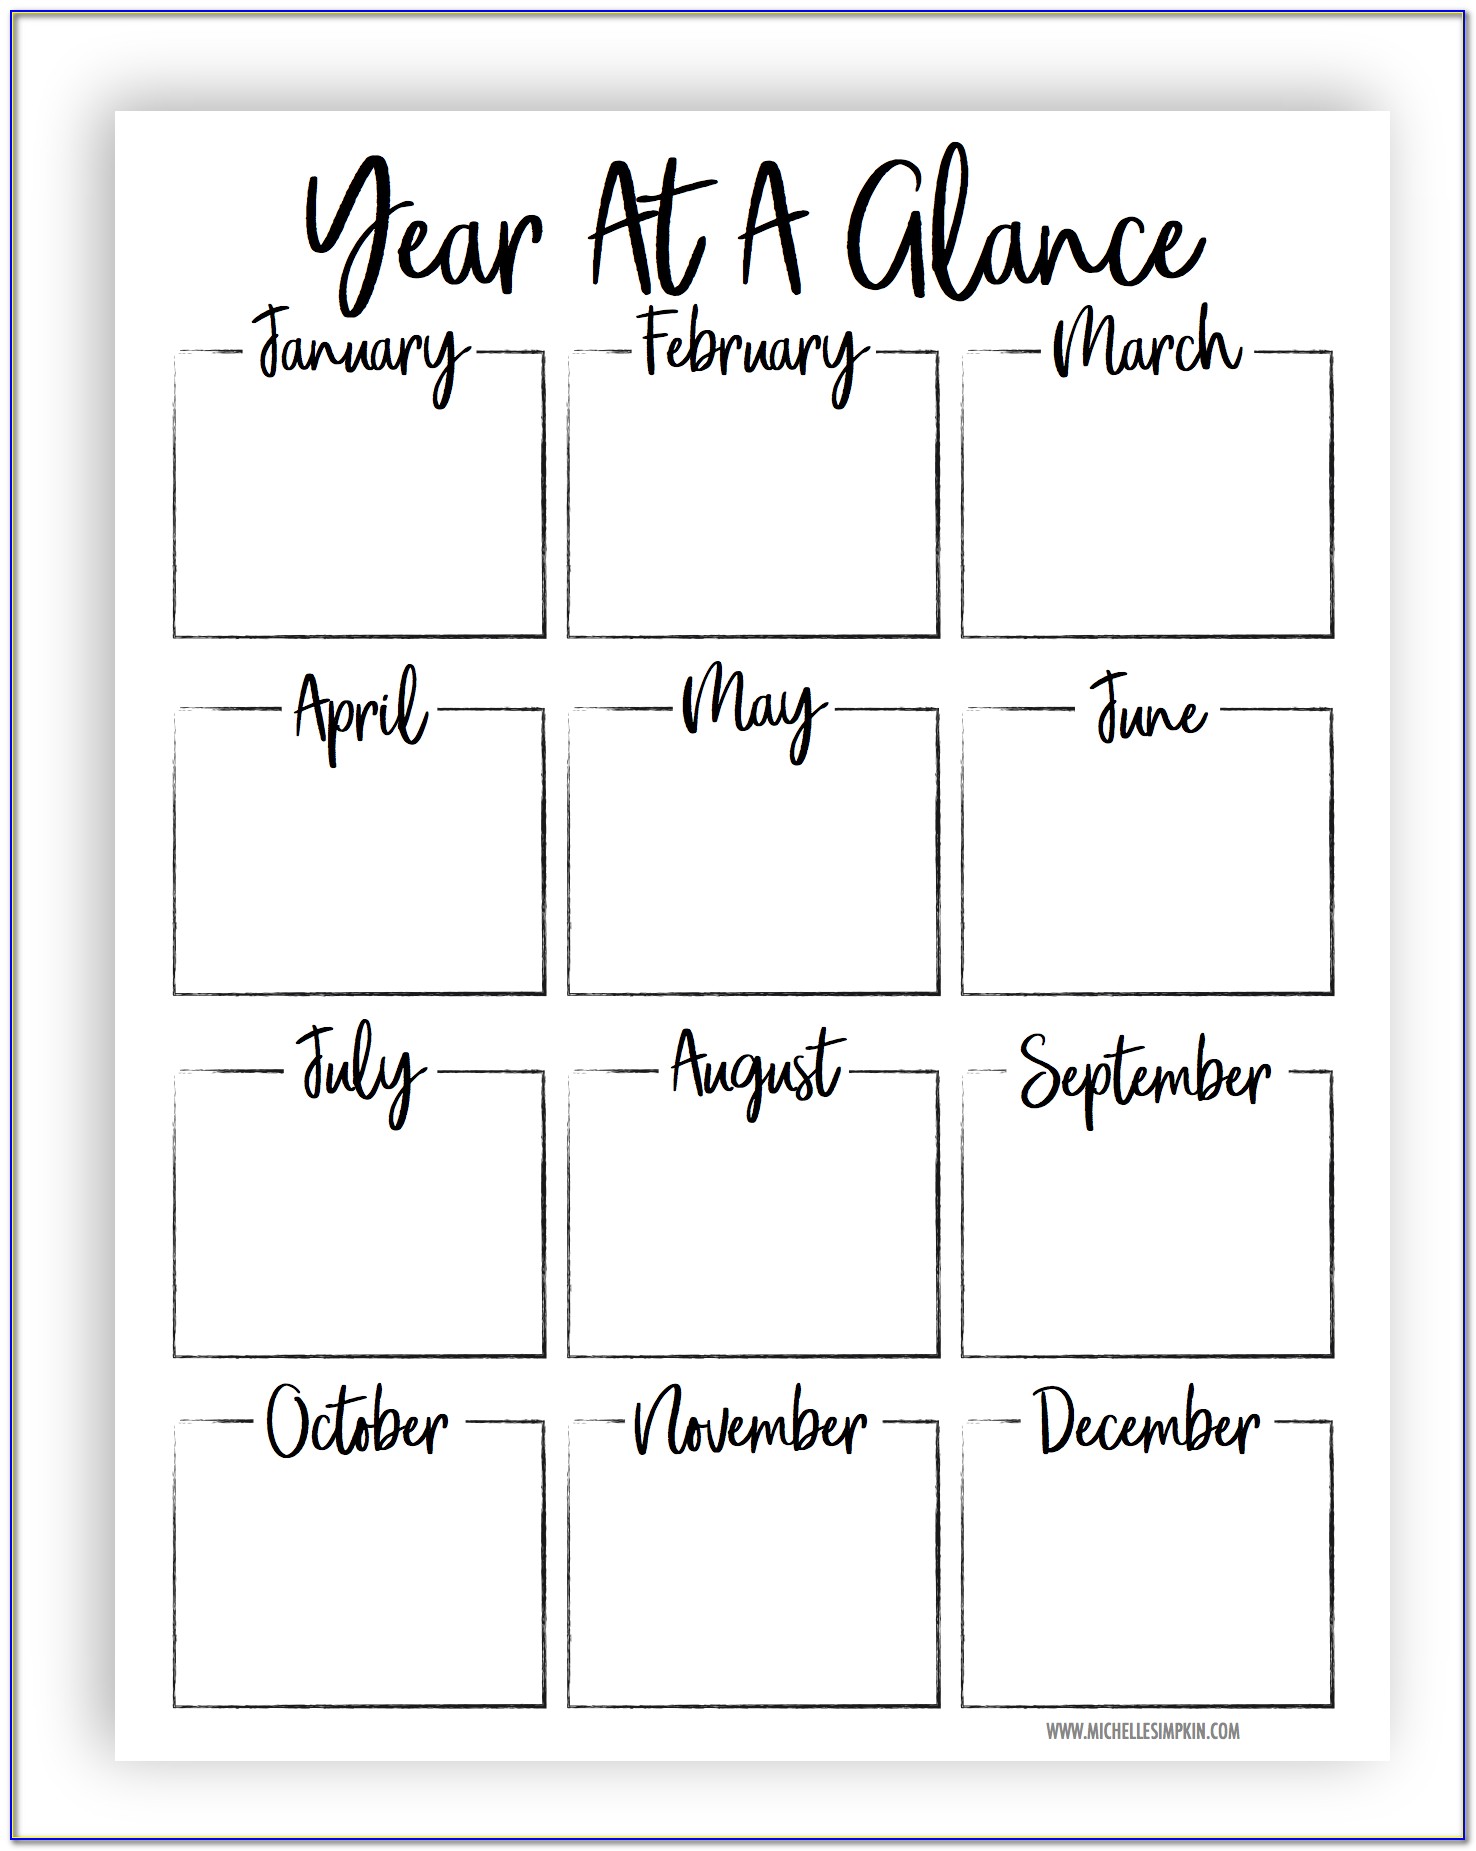 Calendar Year At A Glance Template